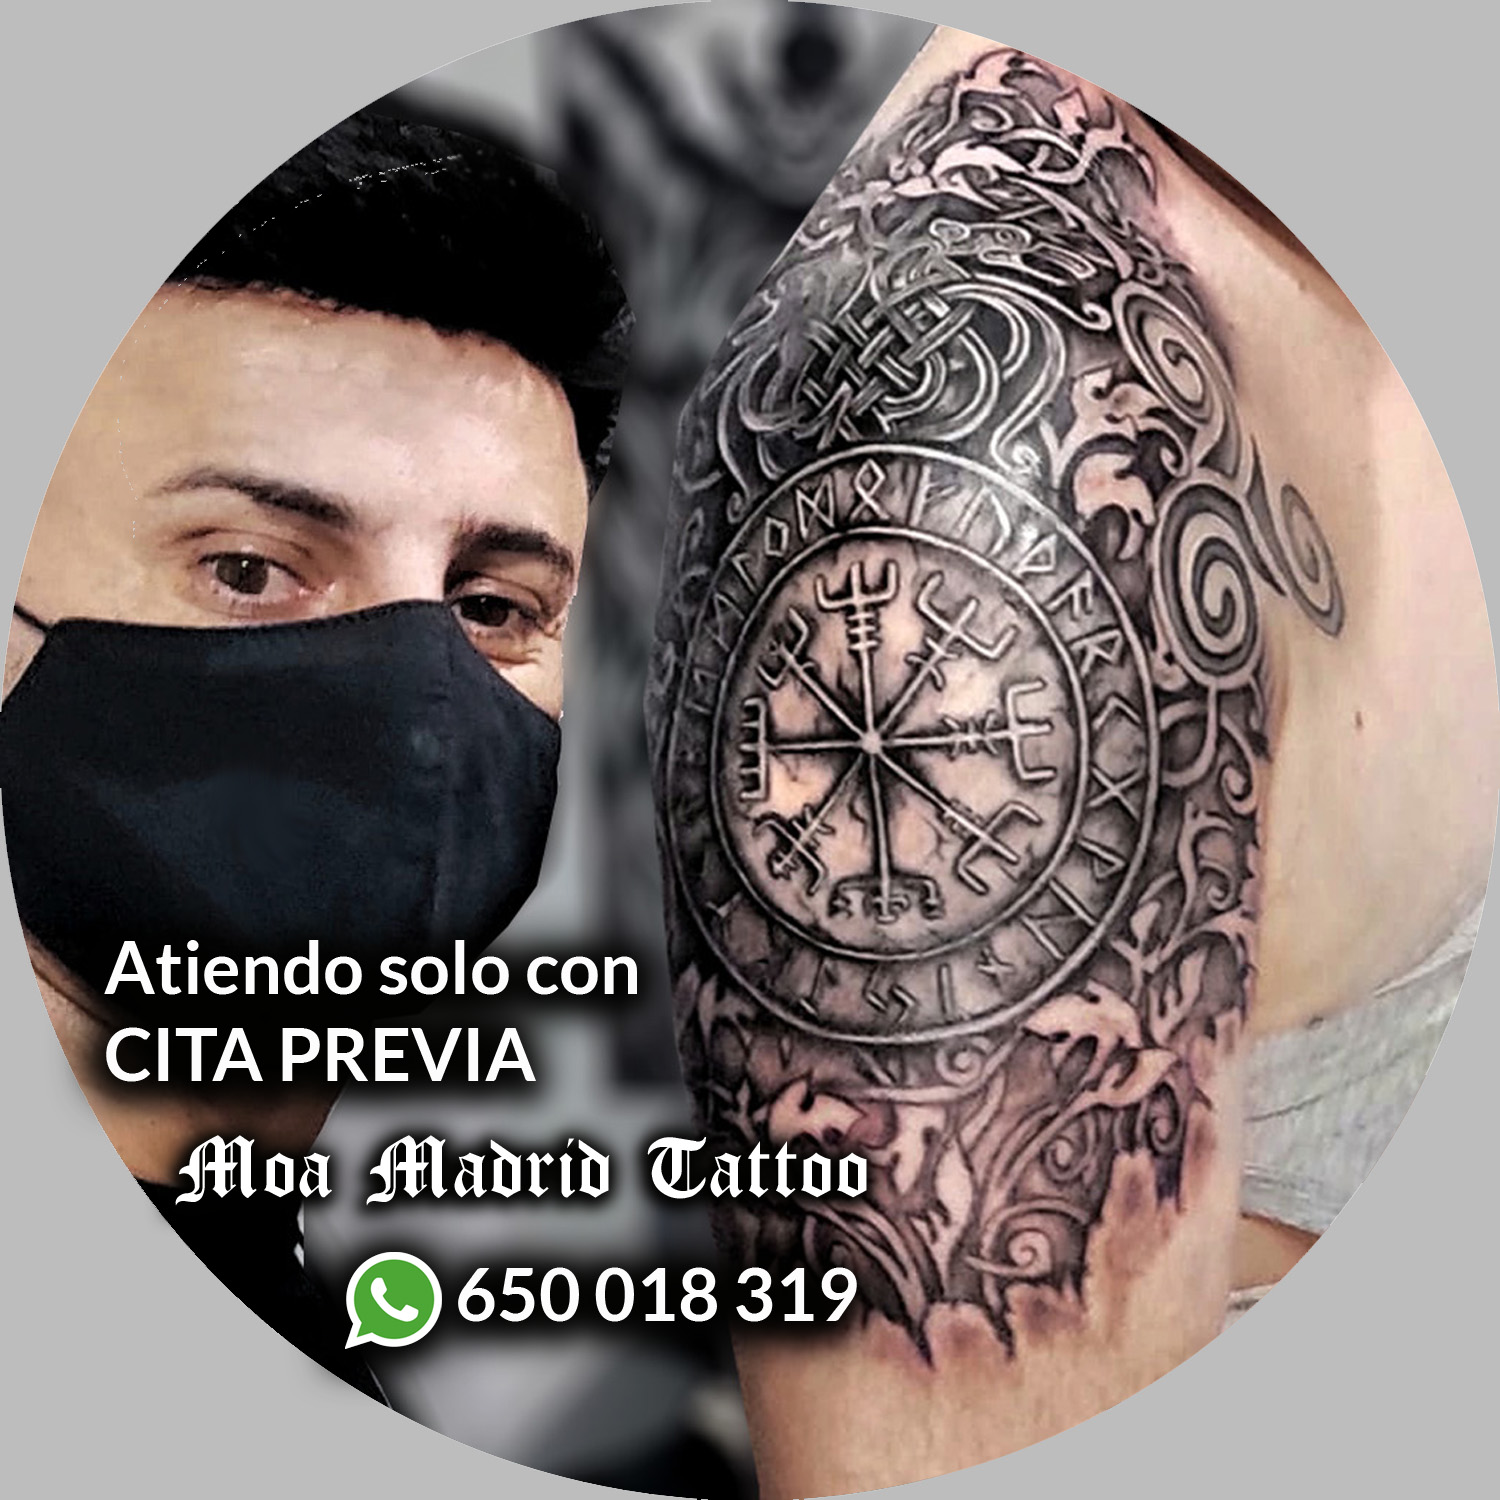 WhatsApp Moa Madrid Tattoo 650 018 319